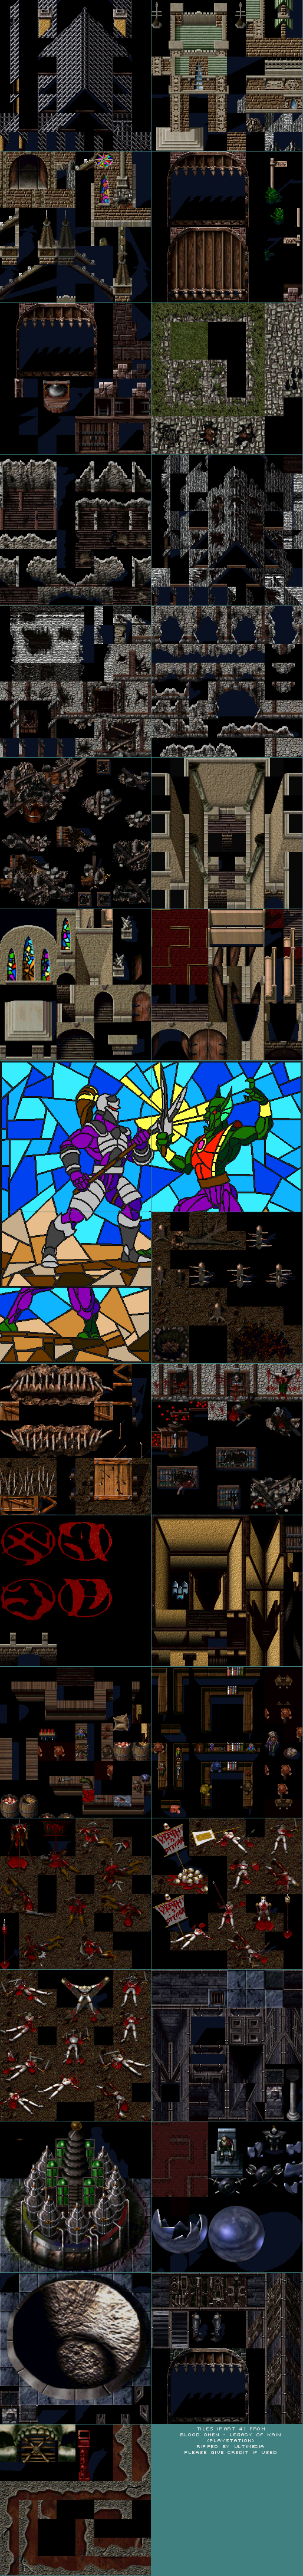 Legacy of Kain: Blood Omen - Tiles 04